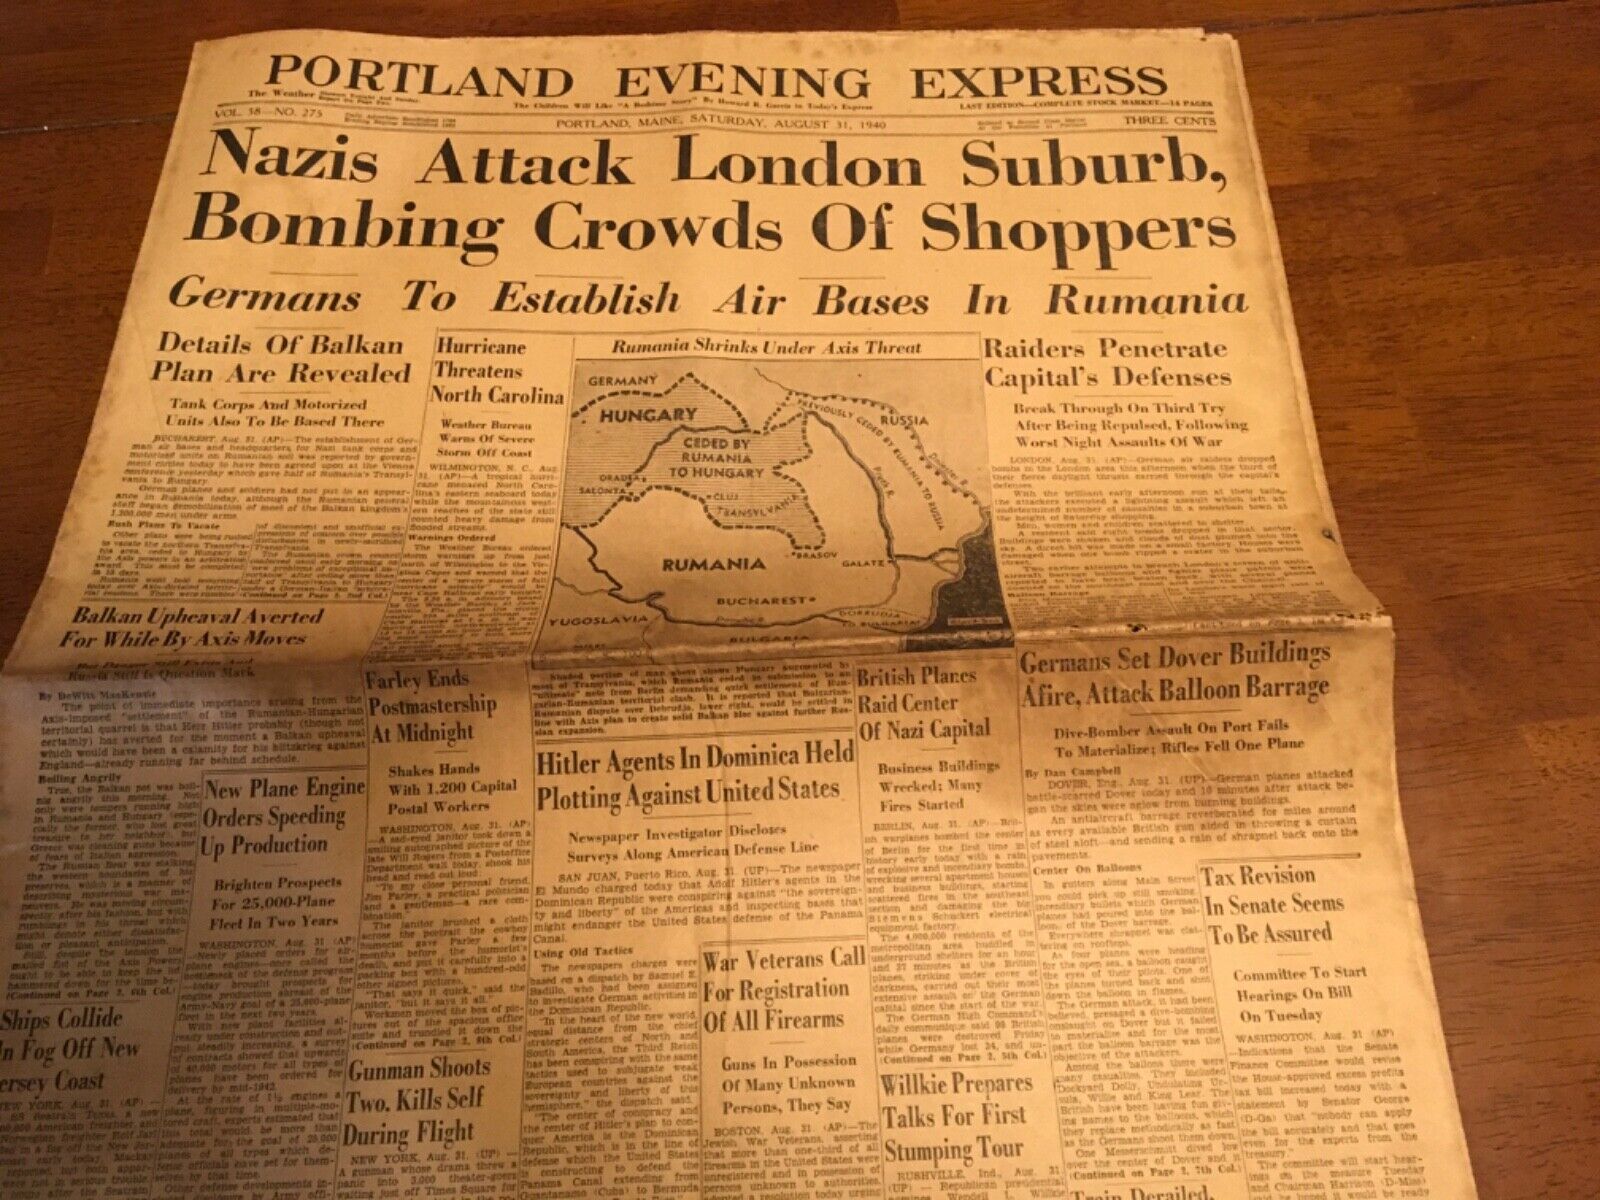 THE PORTLAND EVENING EXPRESS MAINE NEWSPAPER AUGUST 31 1940